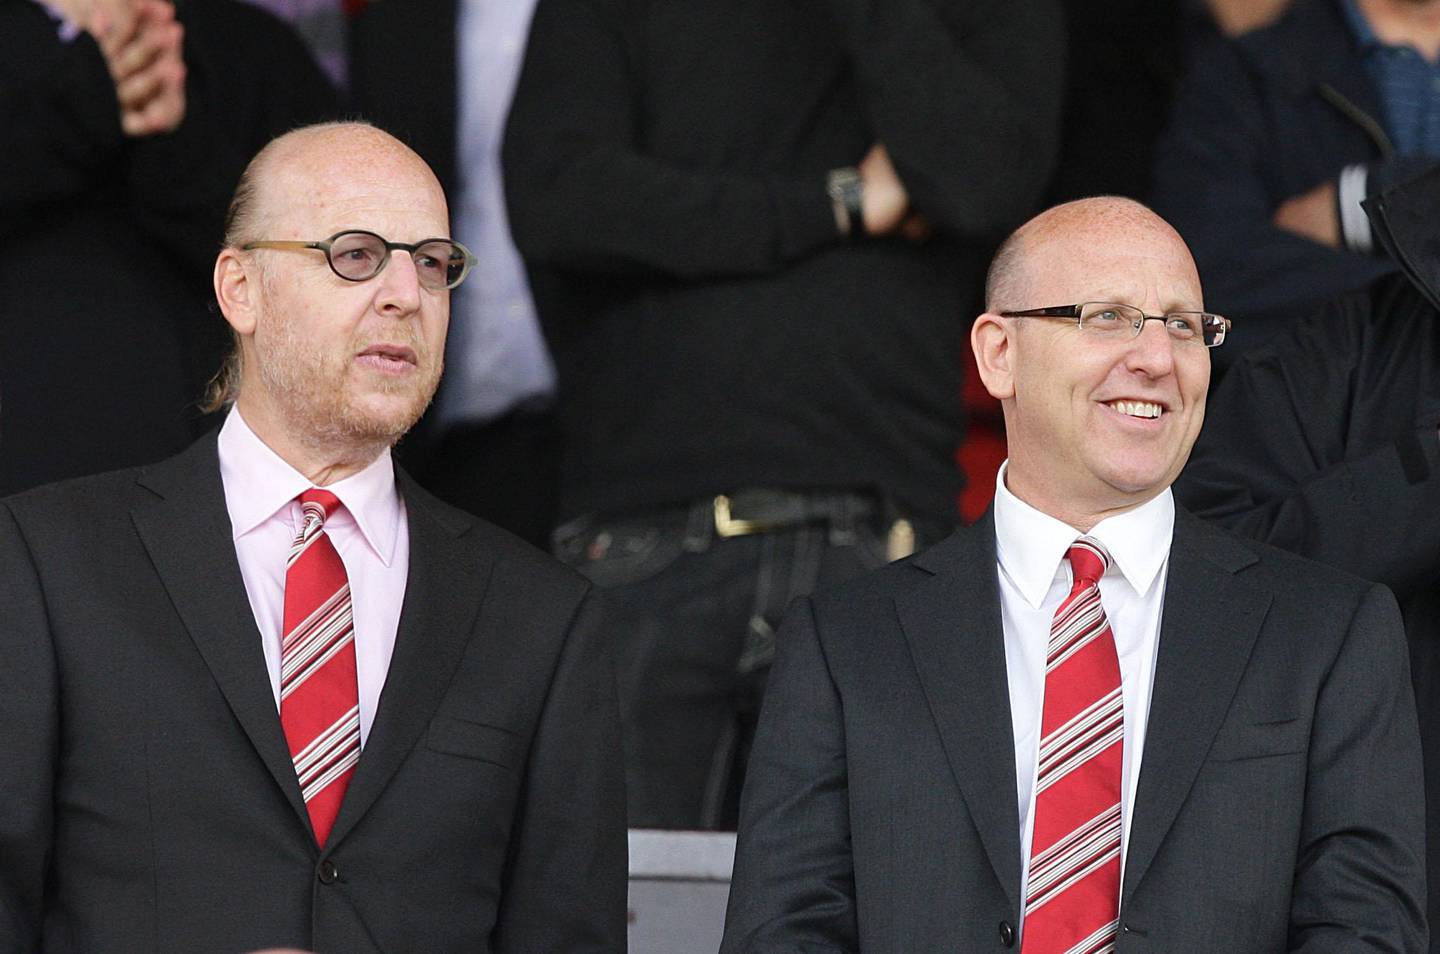 Avram Glazer, left, alongside brother and fellow Manchester United director Joel. PA